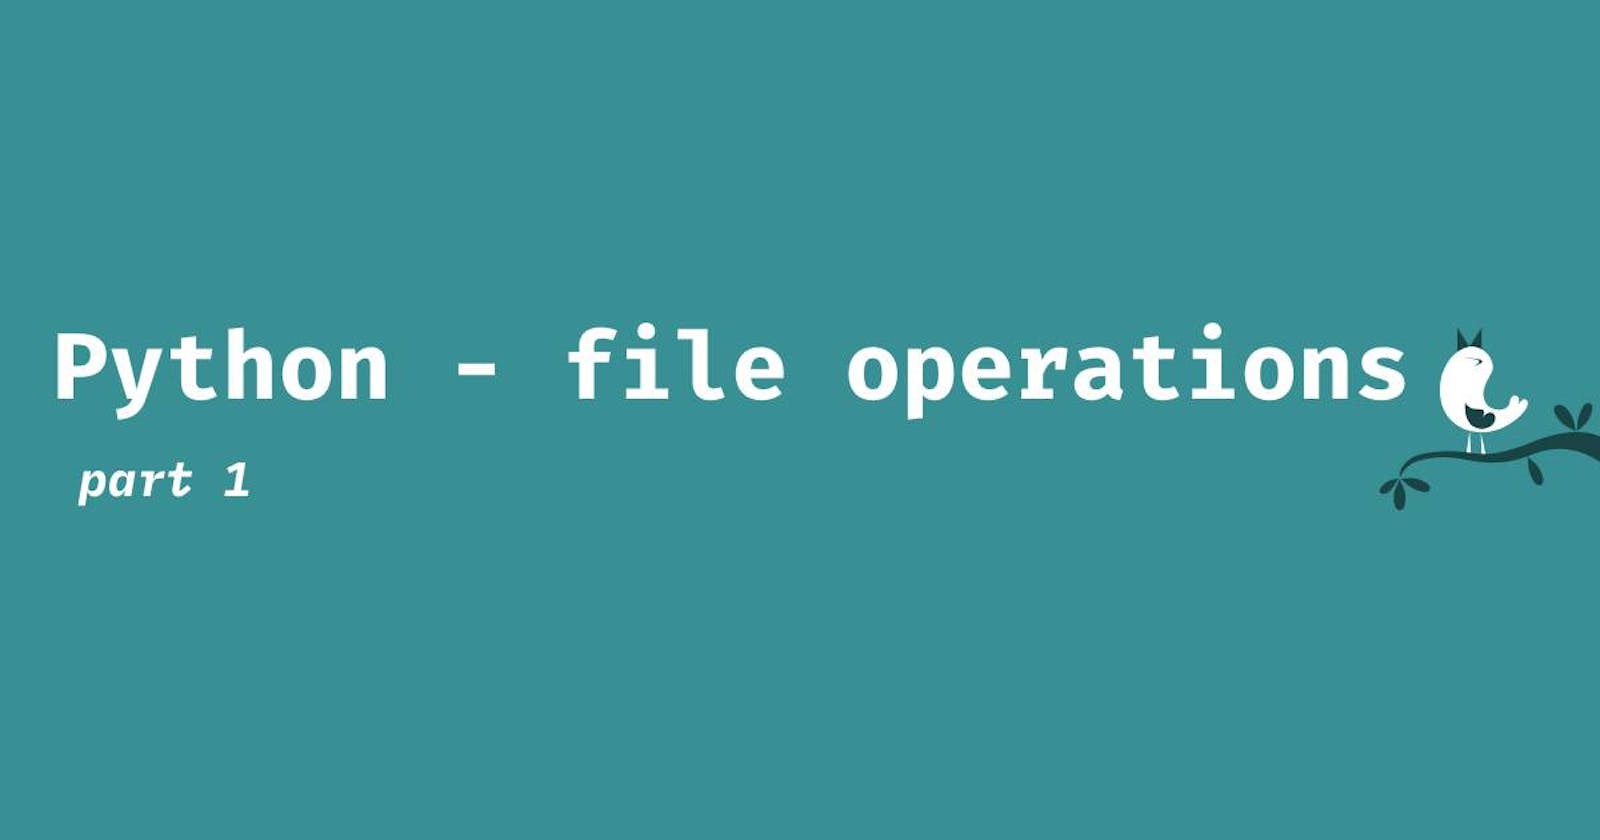 Python file operations (1)